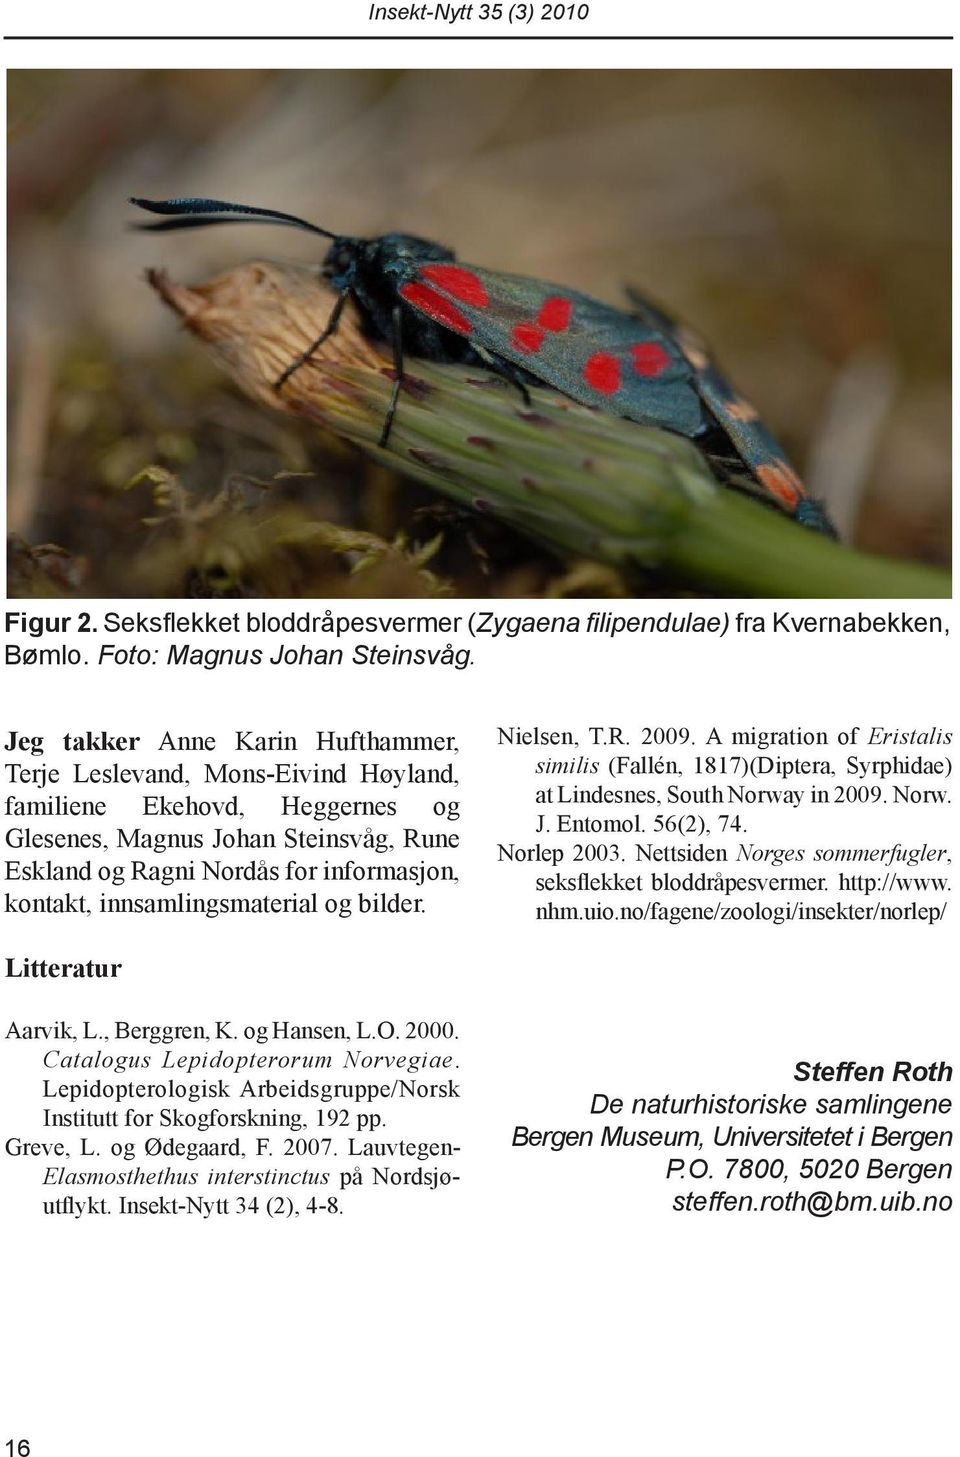 innsamlingsmaterial og bilder. Nielsen, T.R. 2009. A migration of Eristalis similis (Fallén, 1817)(Diptera, Syrphidae) at Lindesnes, South Norway in 2009. Norw. J. Entomol. 56(2), 74. Norlep 2003.